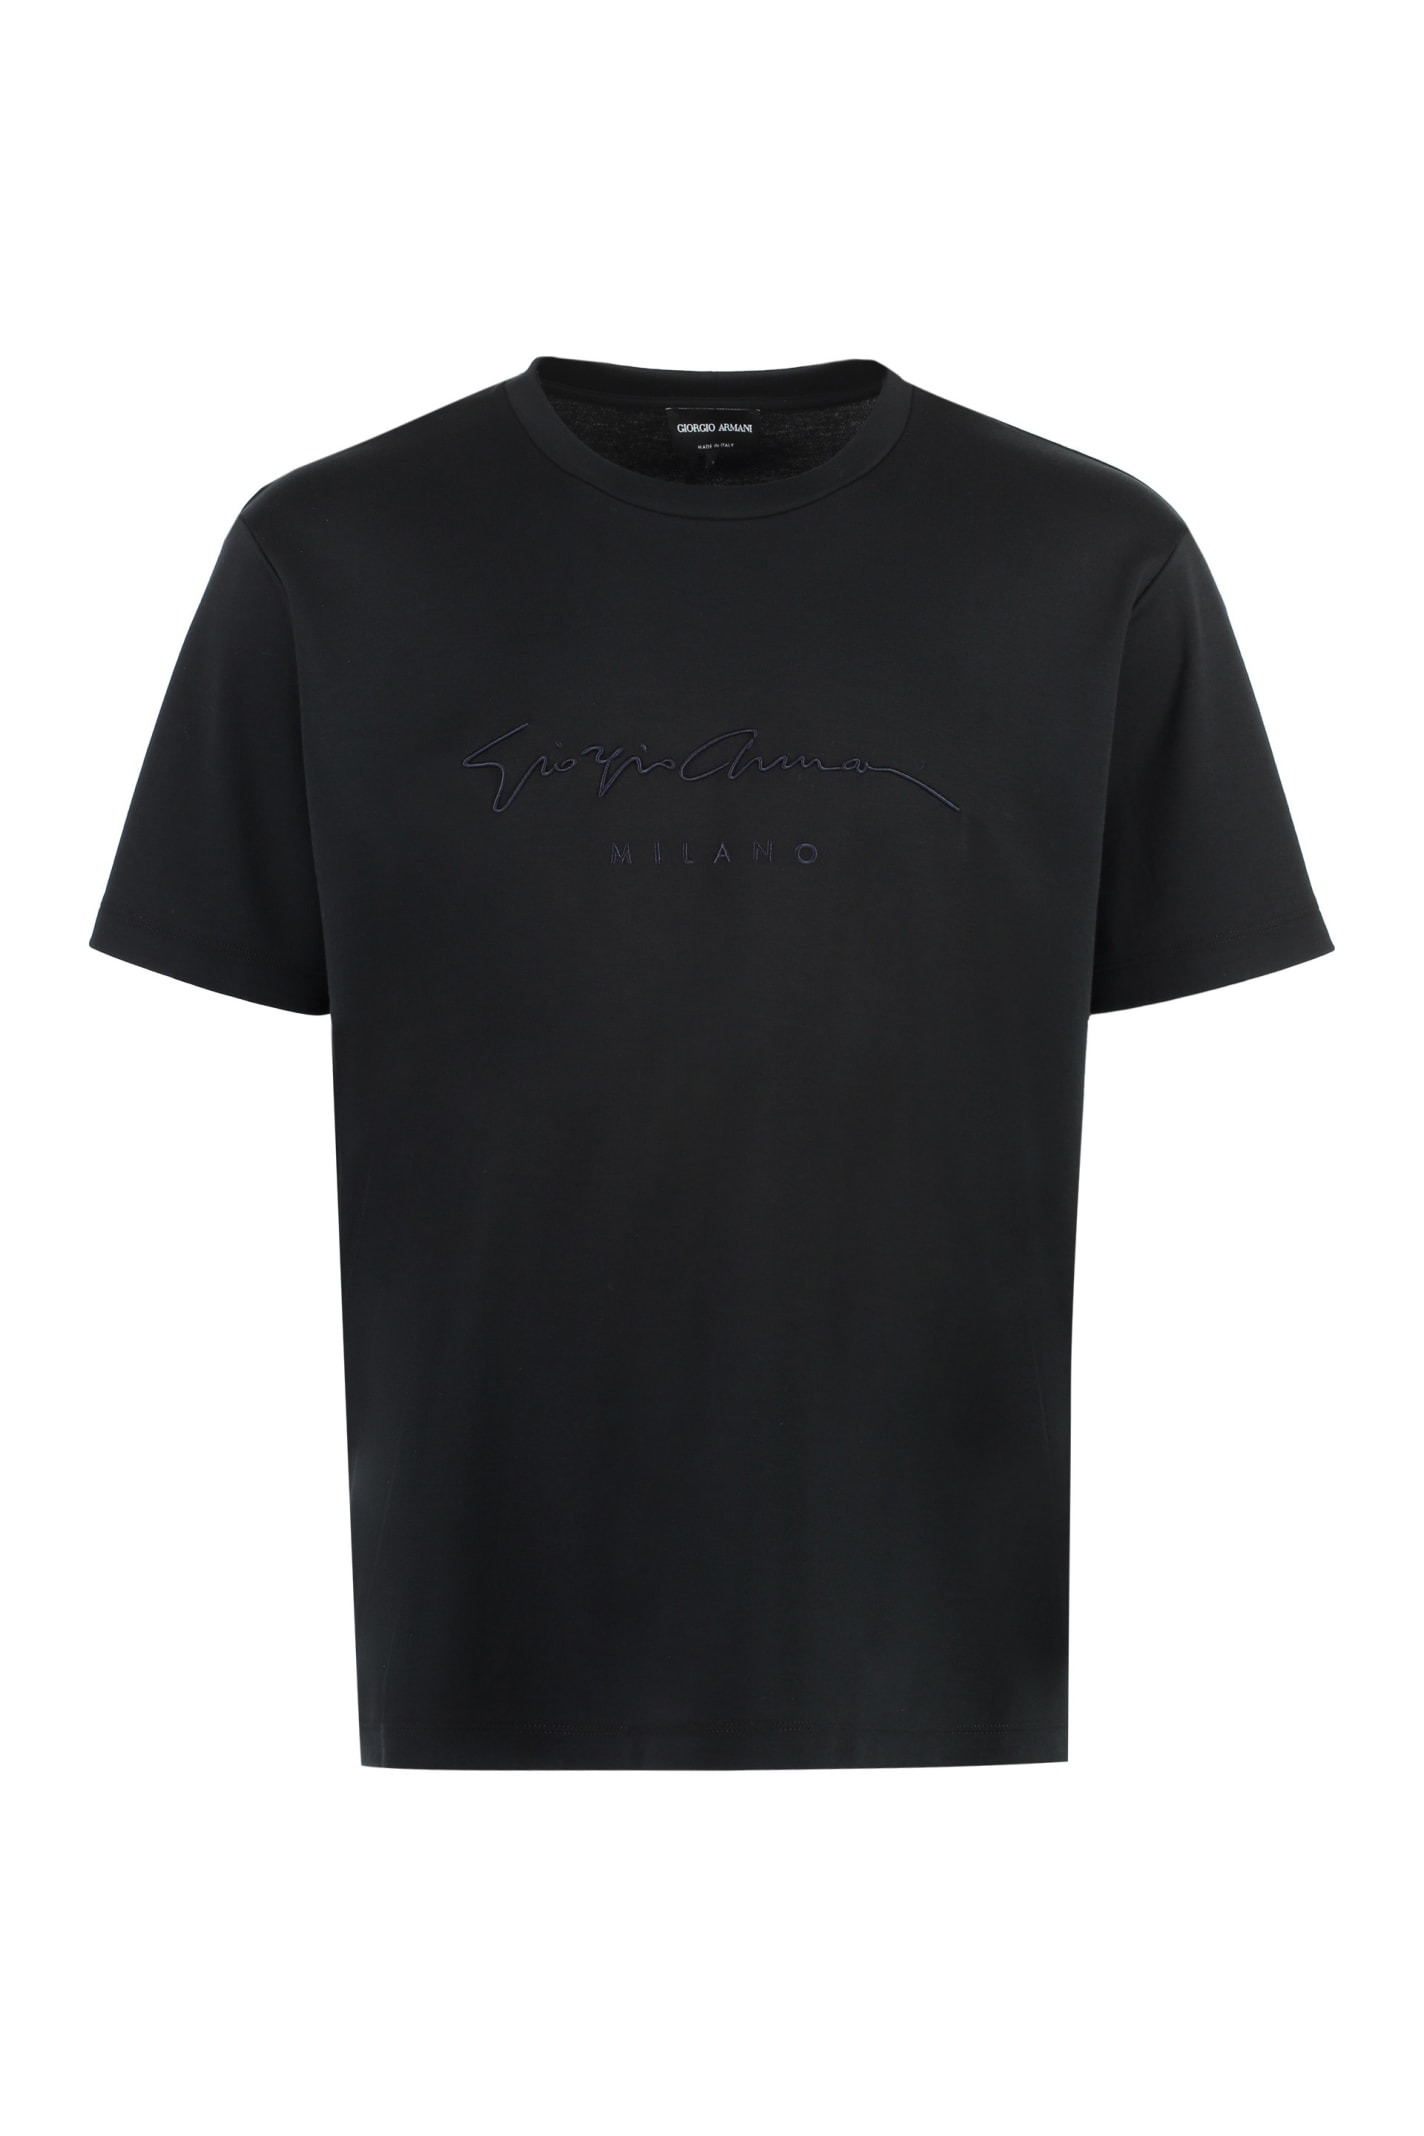 Giorgio Armani Logo Embroidery Cotton T-shirt